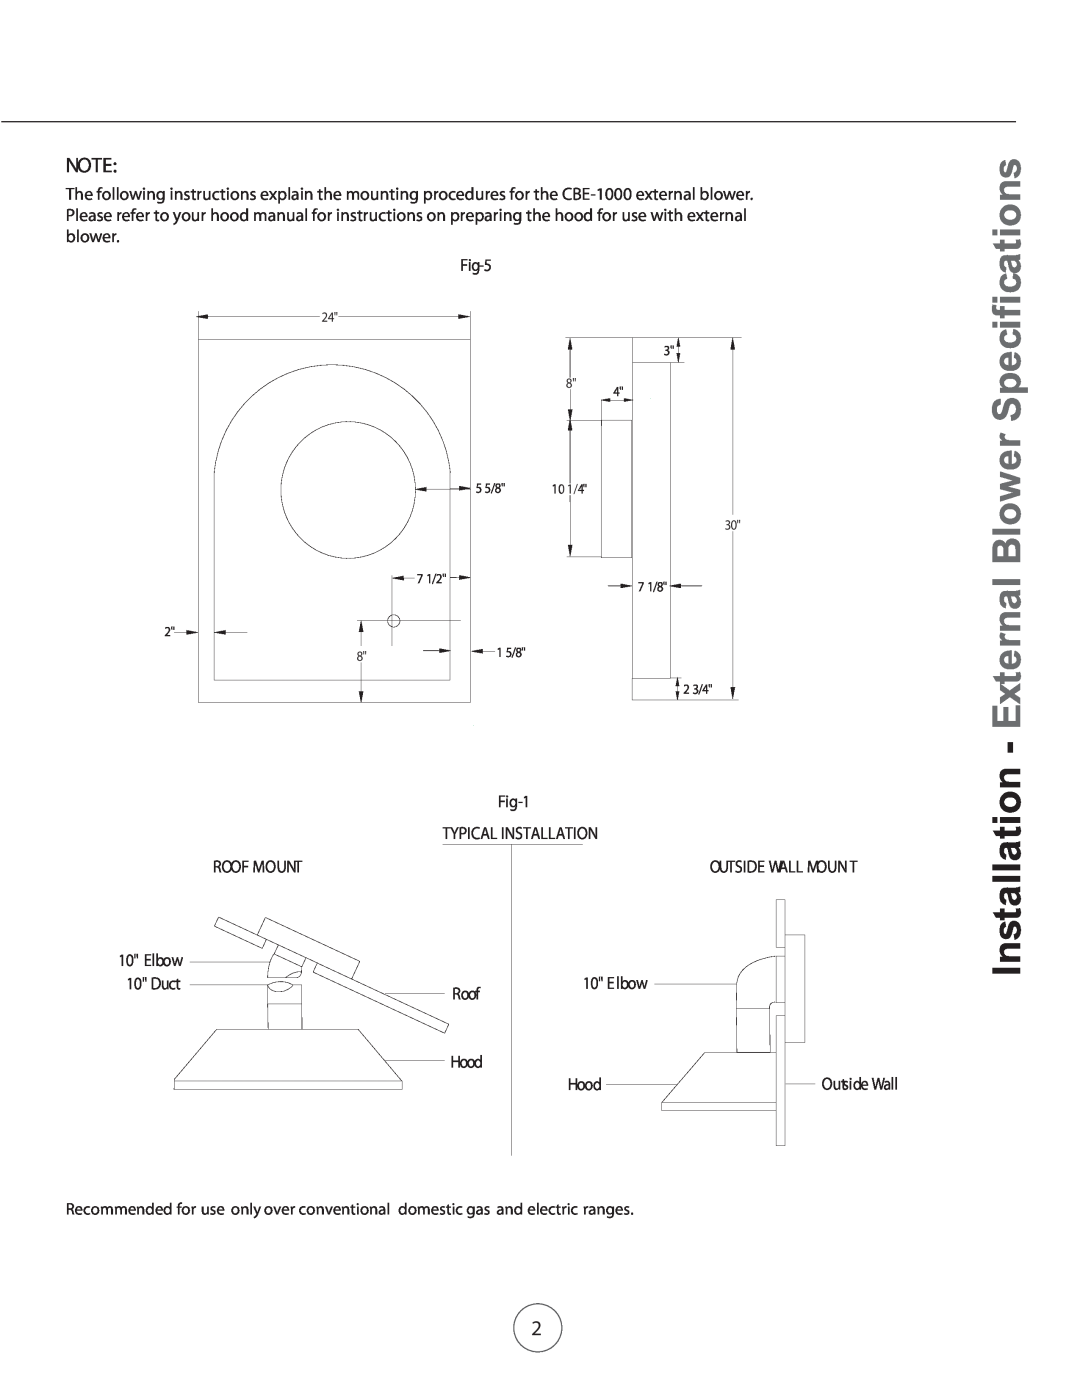 Zephyr CBE-1000 manual External Blower Specifications, Installation 